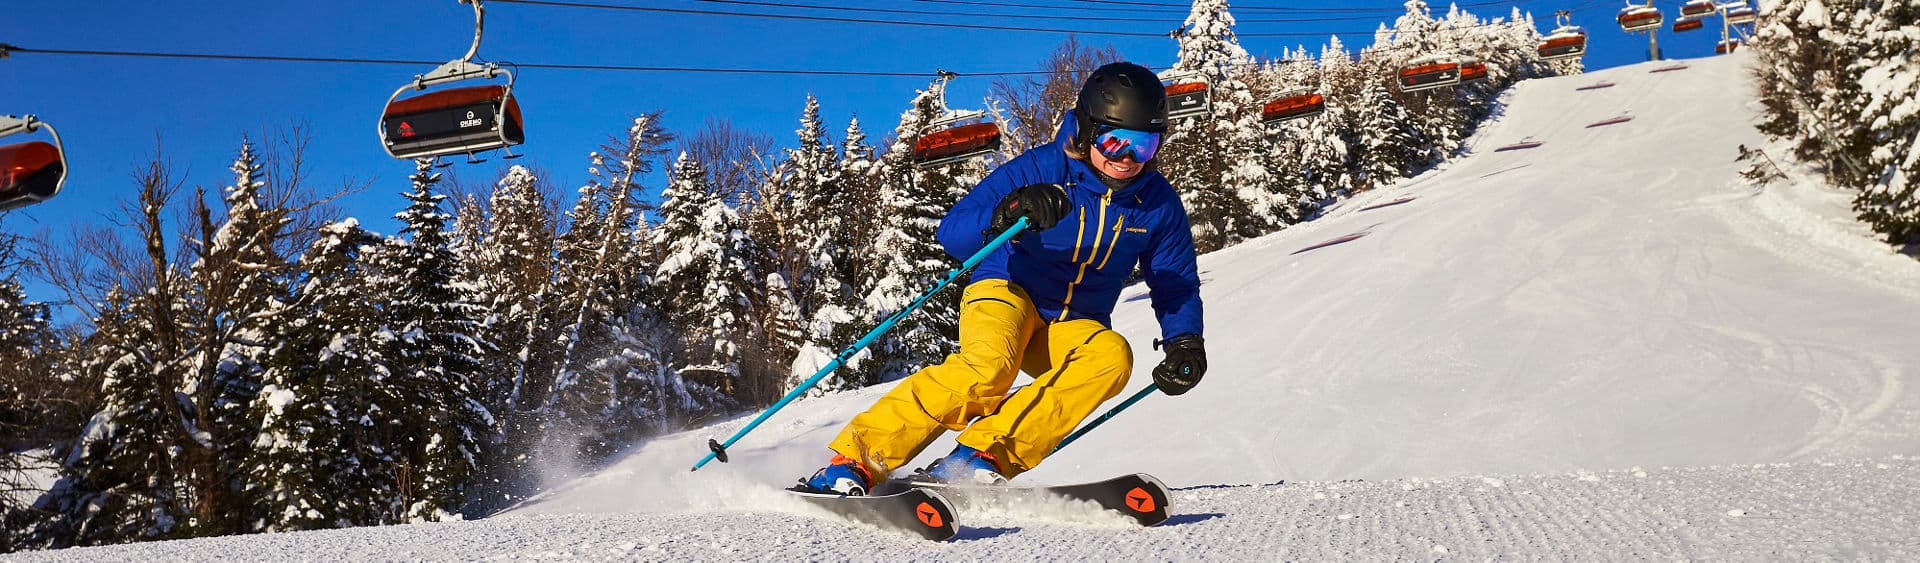 Okemo Mountain Resort - Skiing with Chairlift